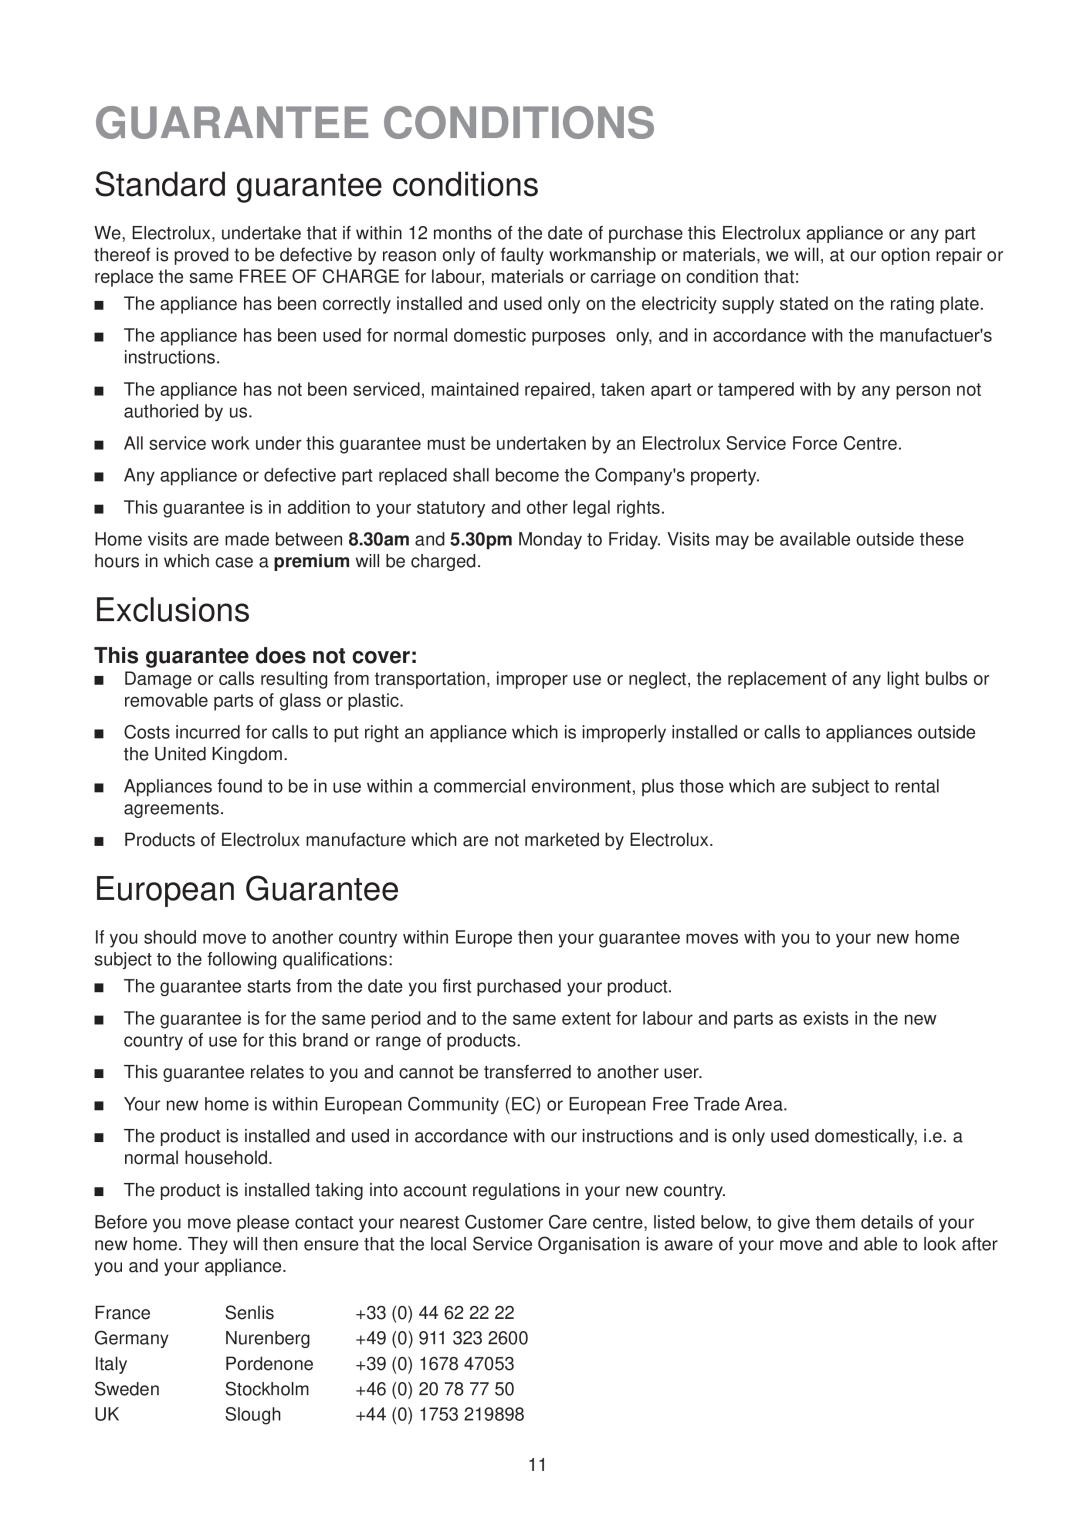 Electrolux U21312 manual Guarantee Conditions, Standard guarantee conditions, Exclusions, European Guarantee 